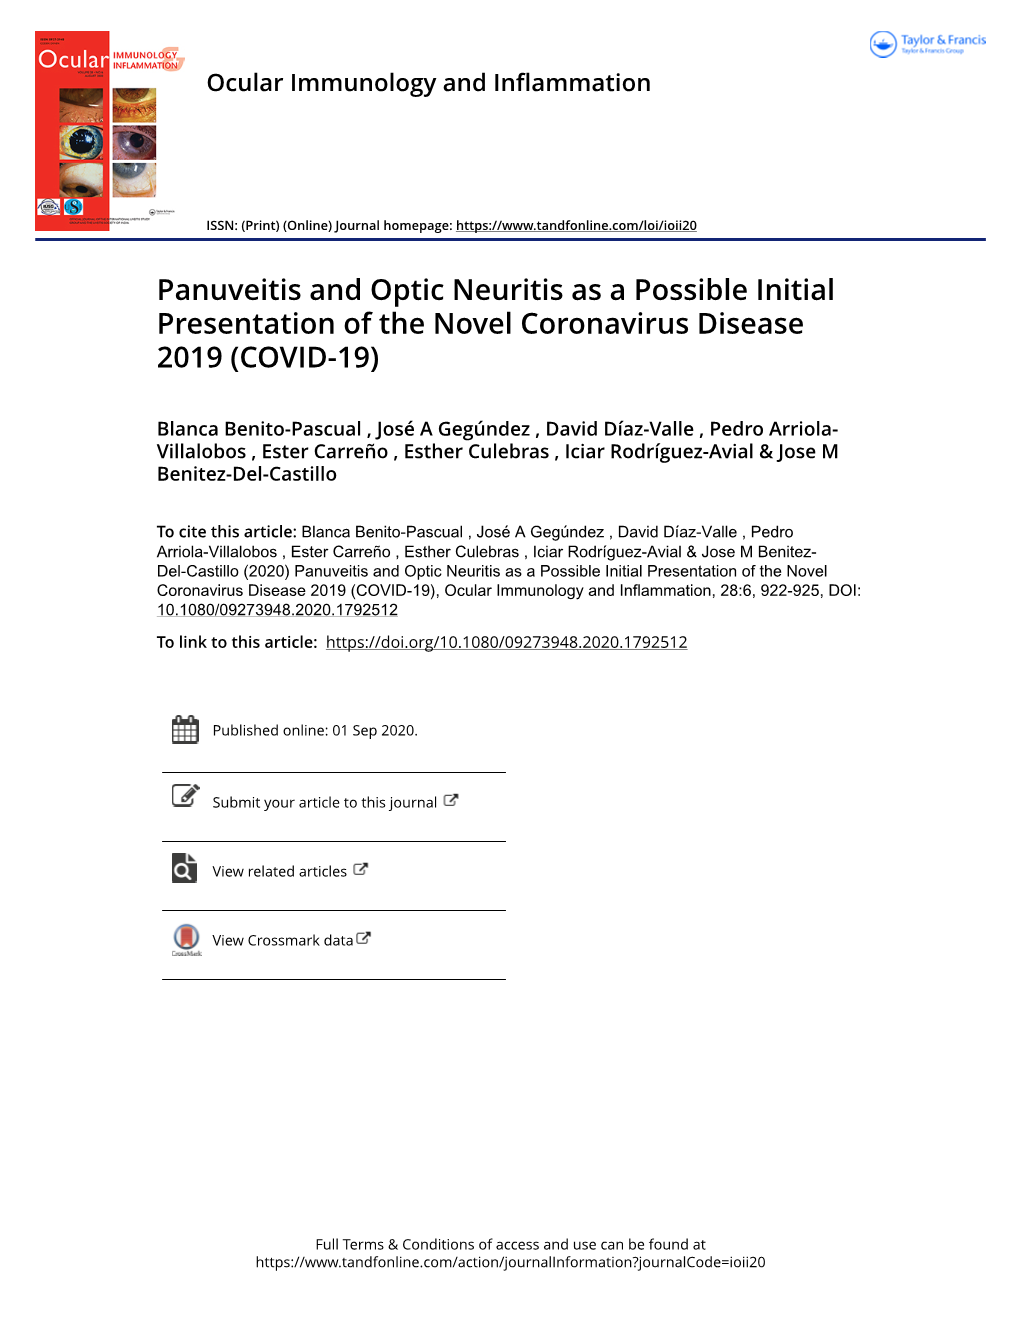 Panuveitis and Optic Neuritis As a Possible Initial Presentation of the Novel Coronavirus Disease 2019 (COVID-19)